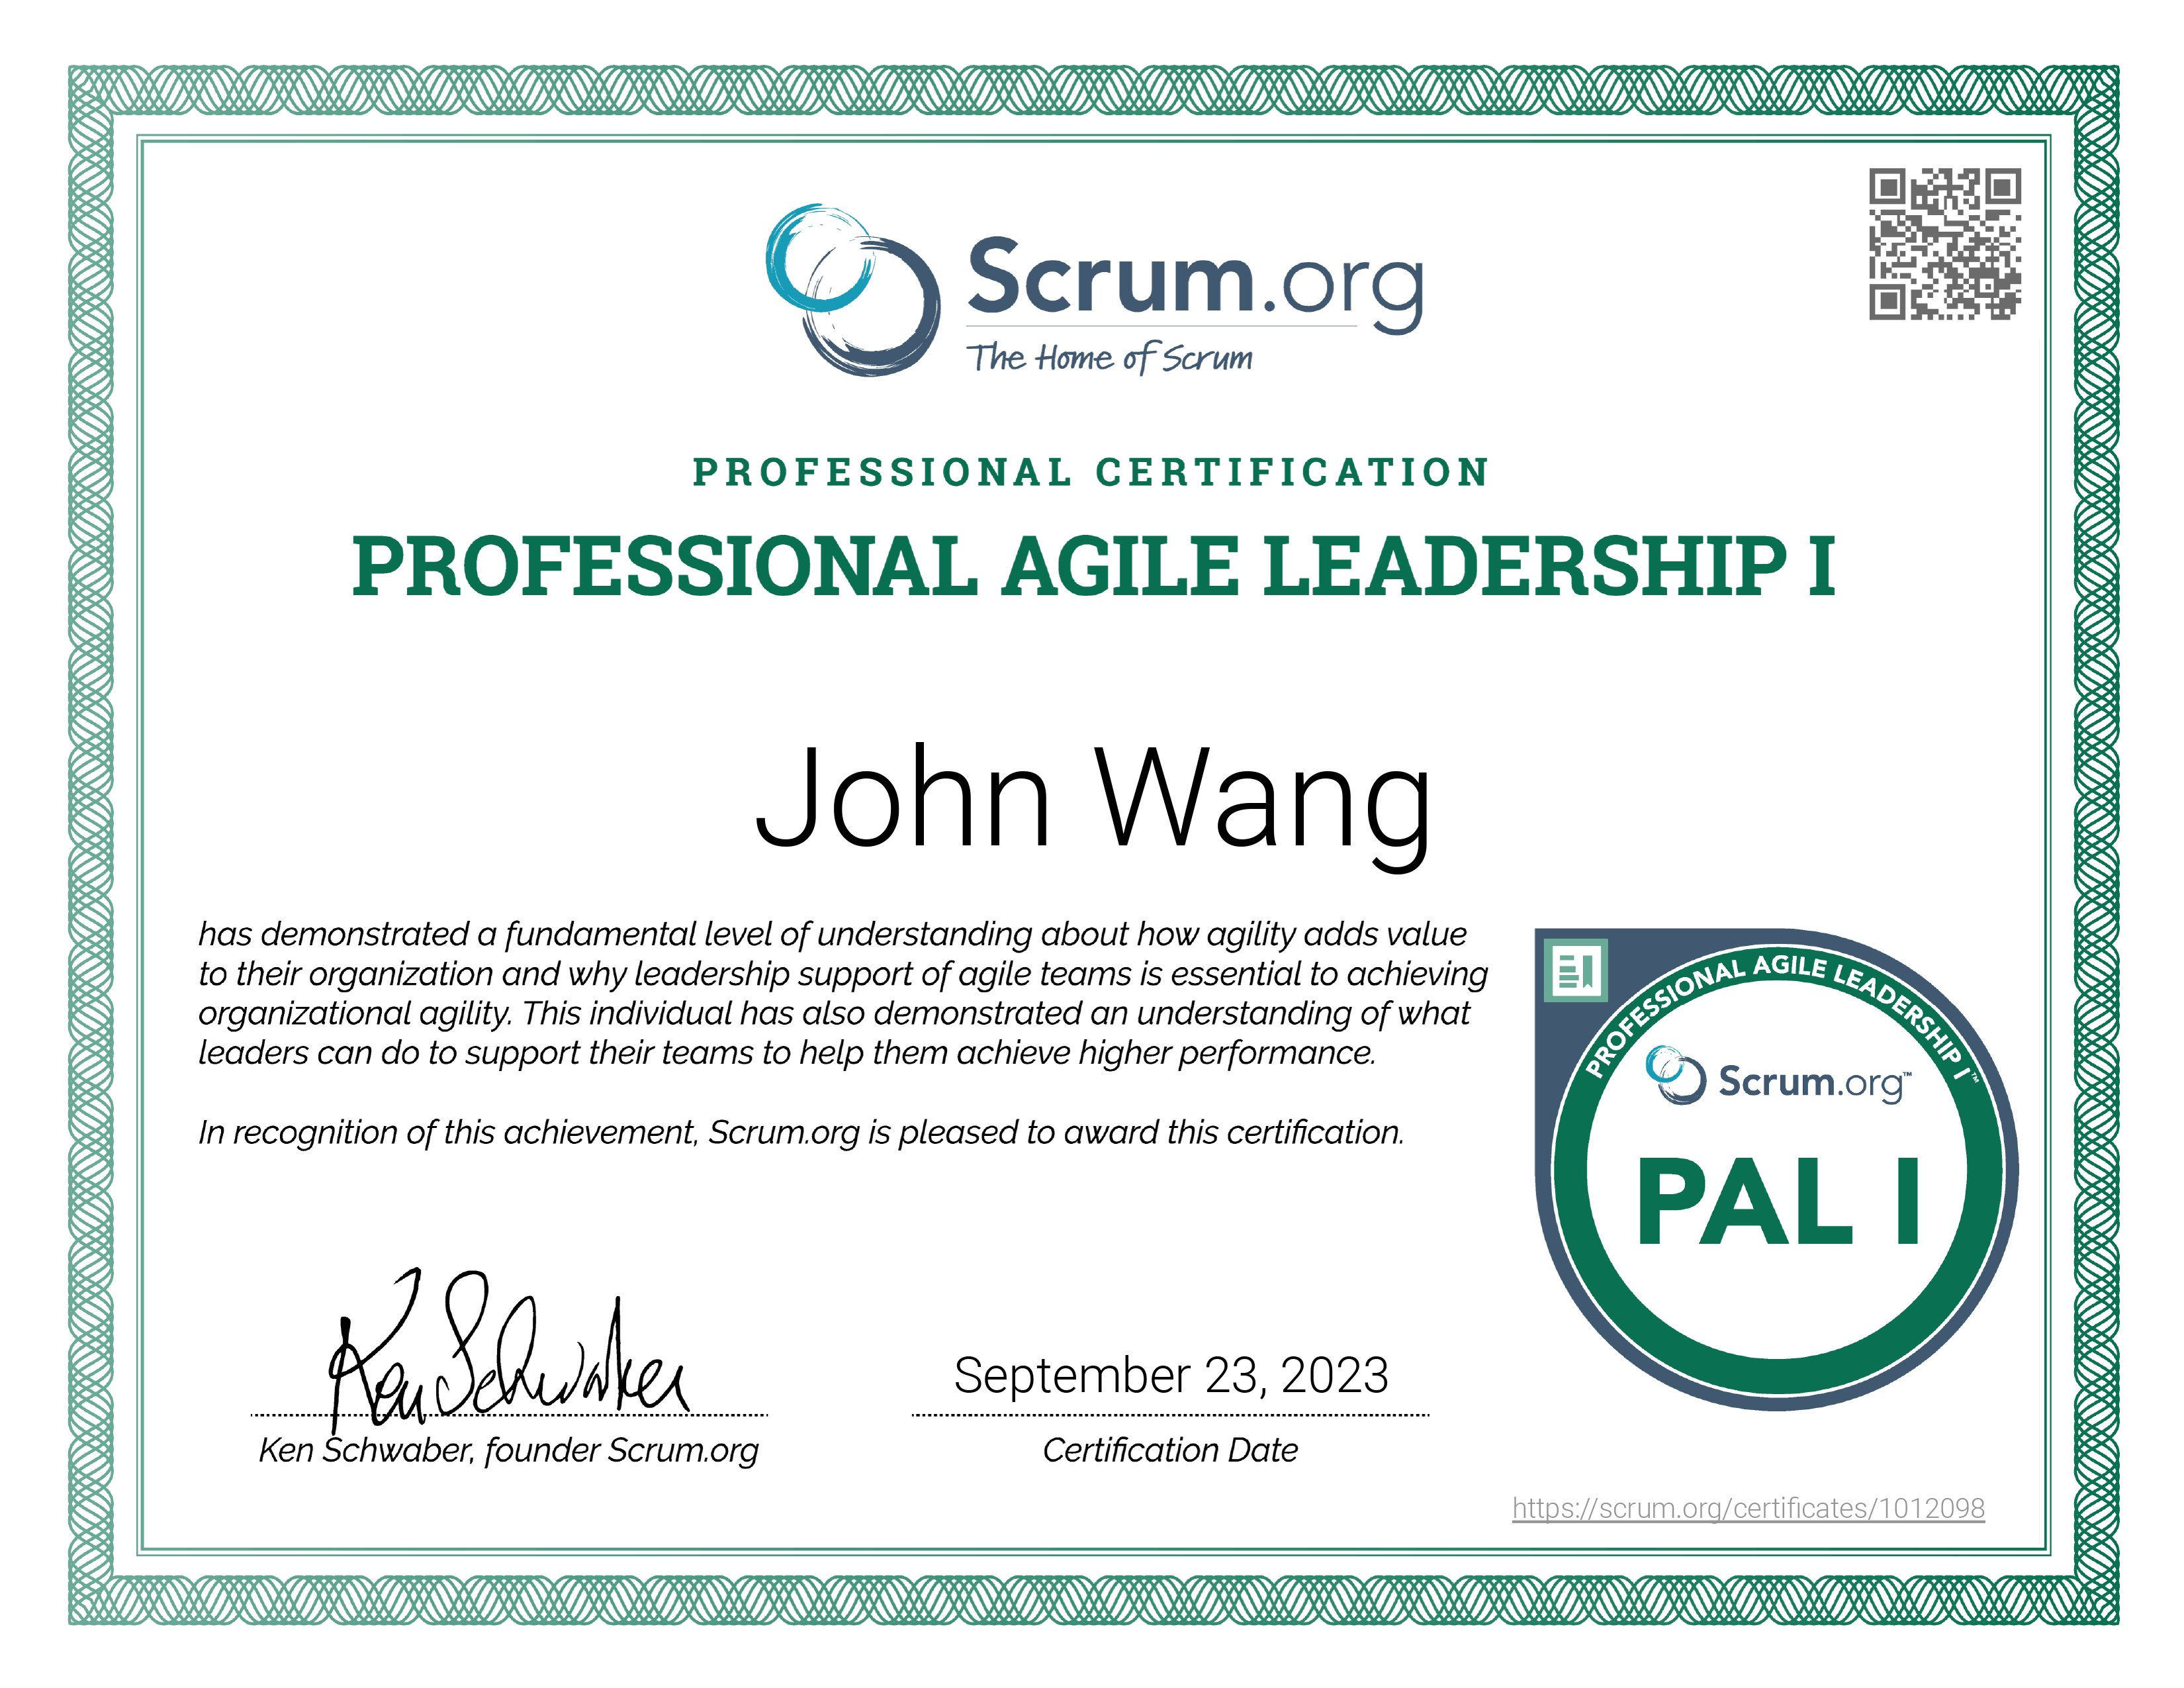 John's Professional Agile Leadership I (PAL I) from Scrum.org